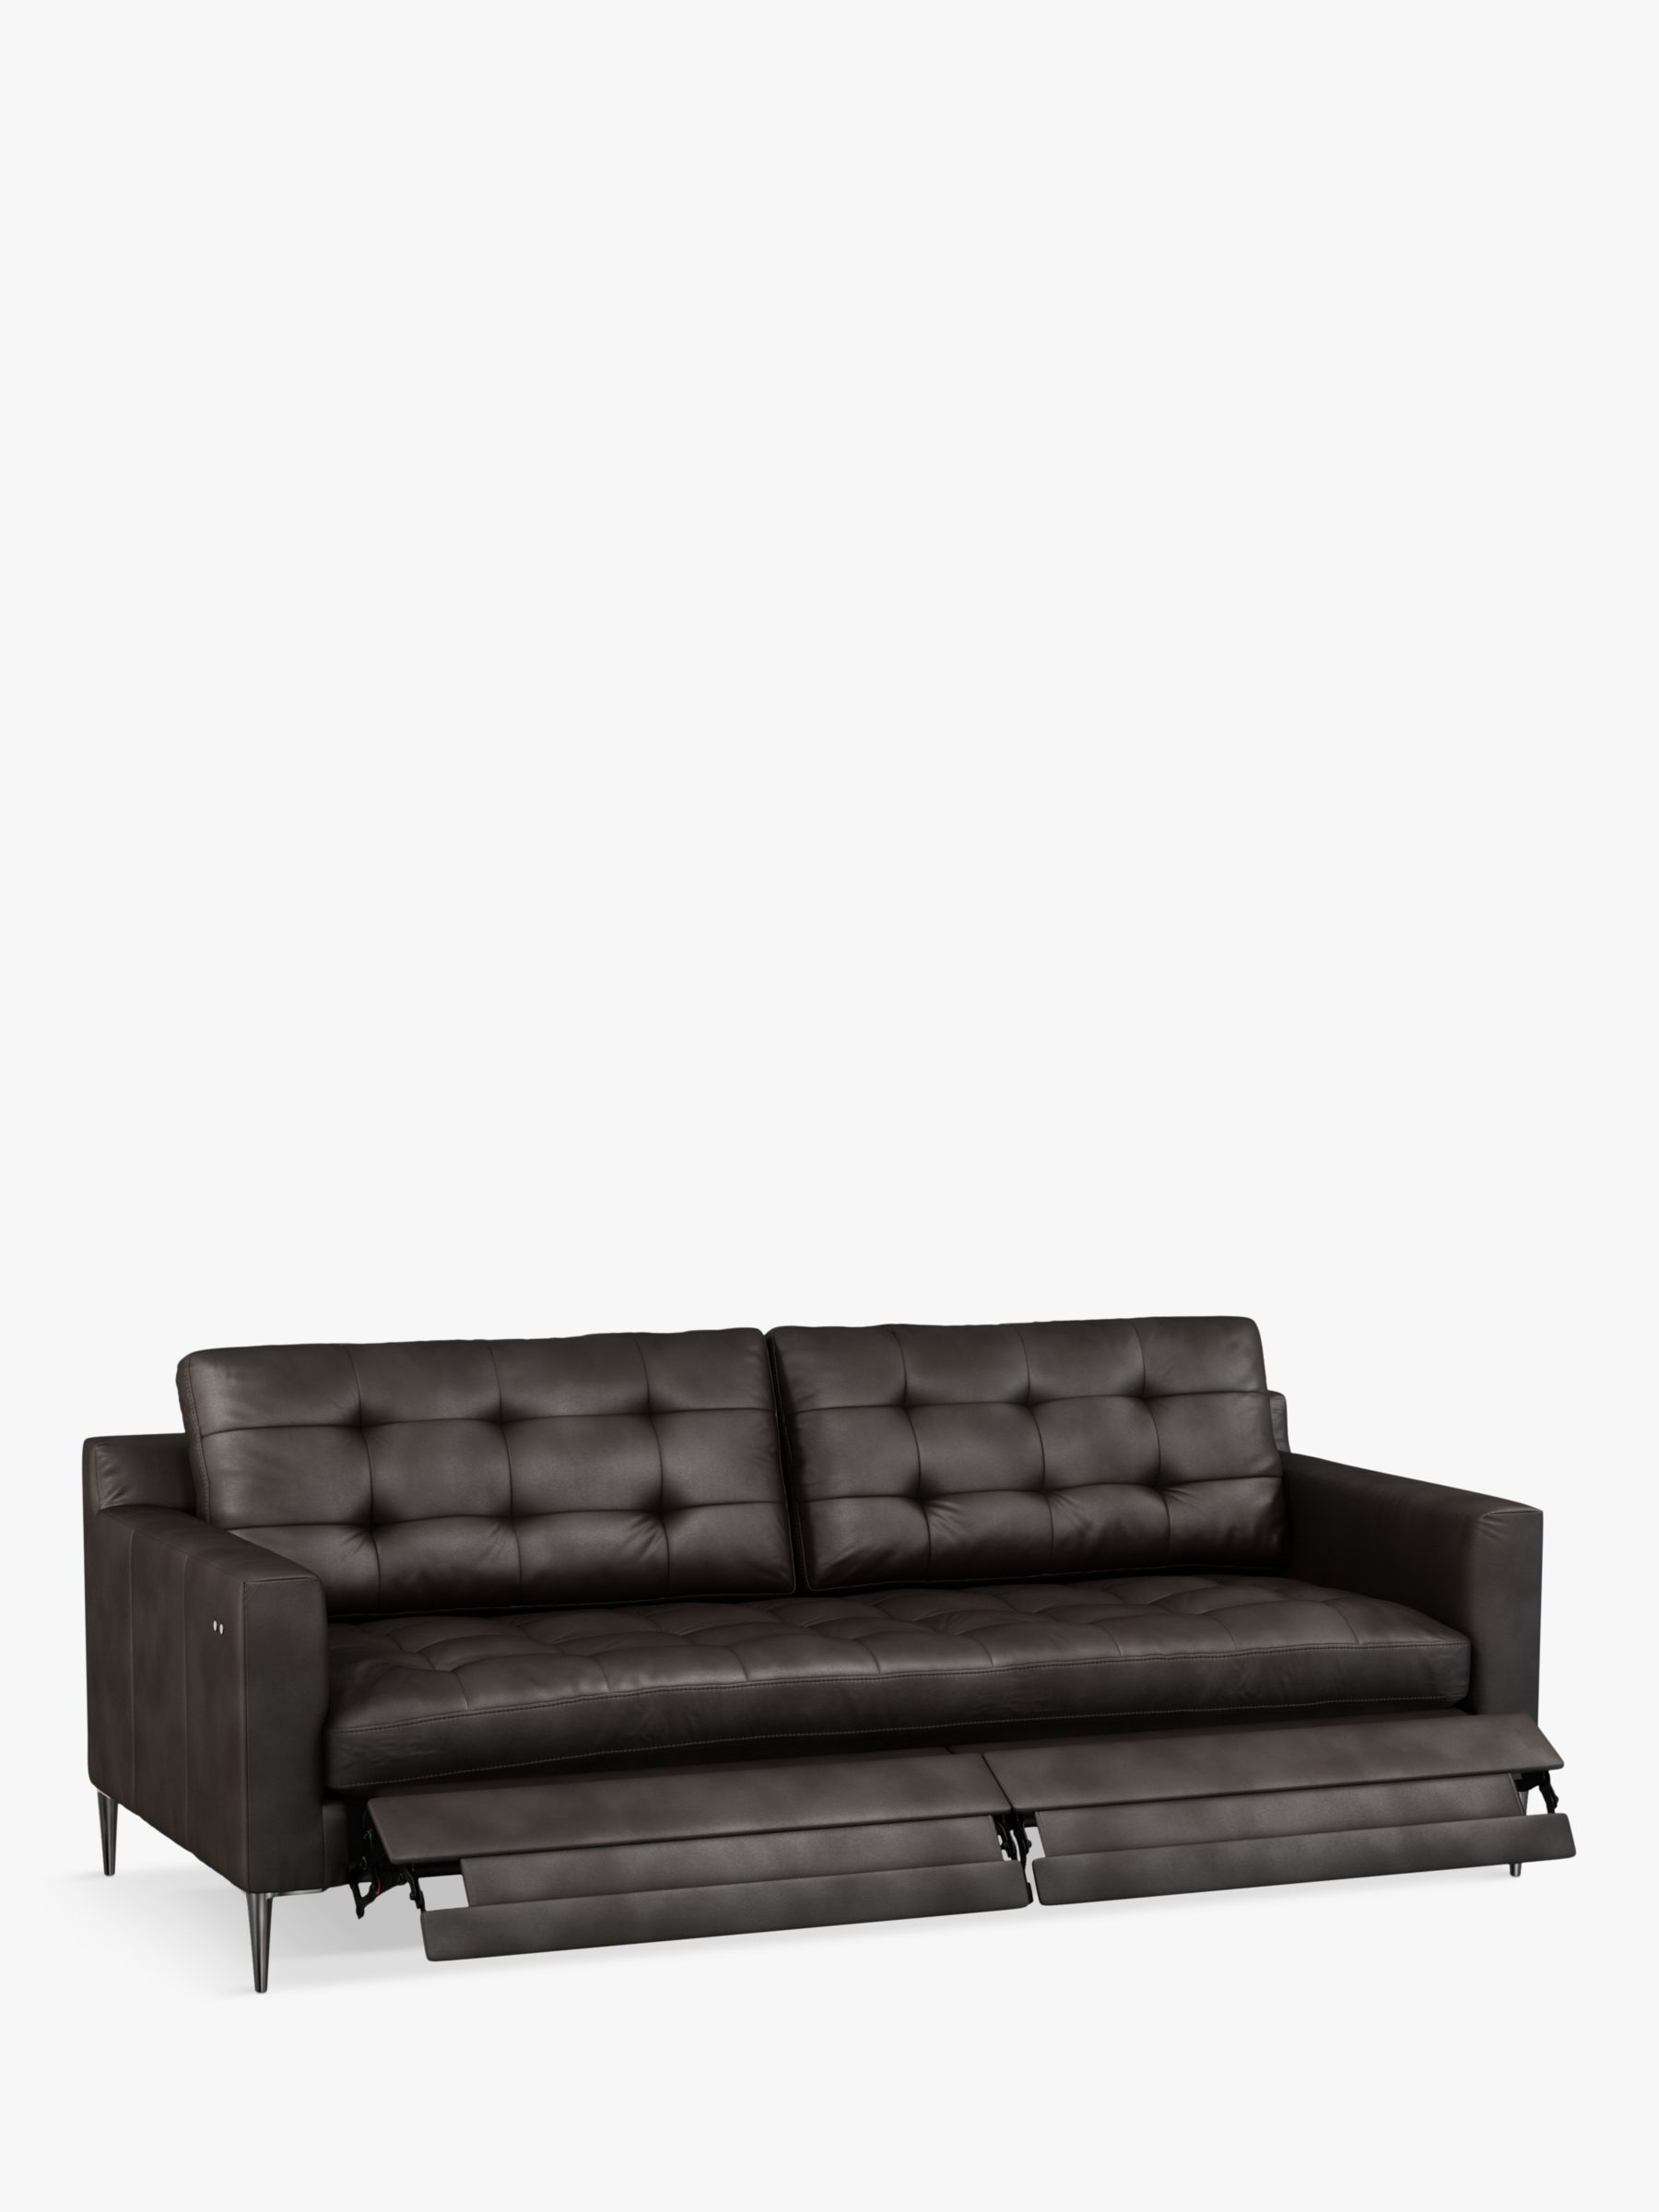 Draper Range, John Lewis Draper Motion Large 3 Seater Leather Sofa with Footrest Mechanism, Metal Leg, Contempo Dark Chocolate